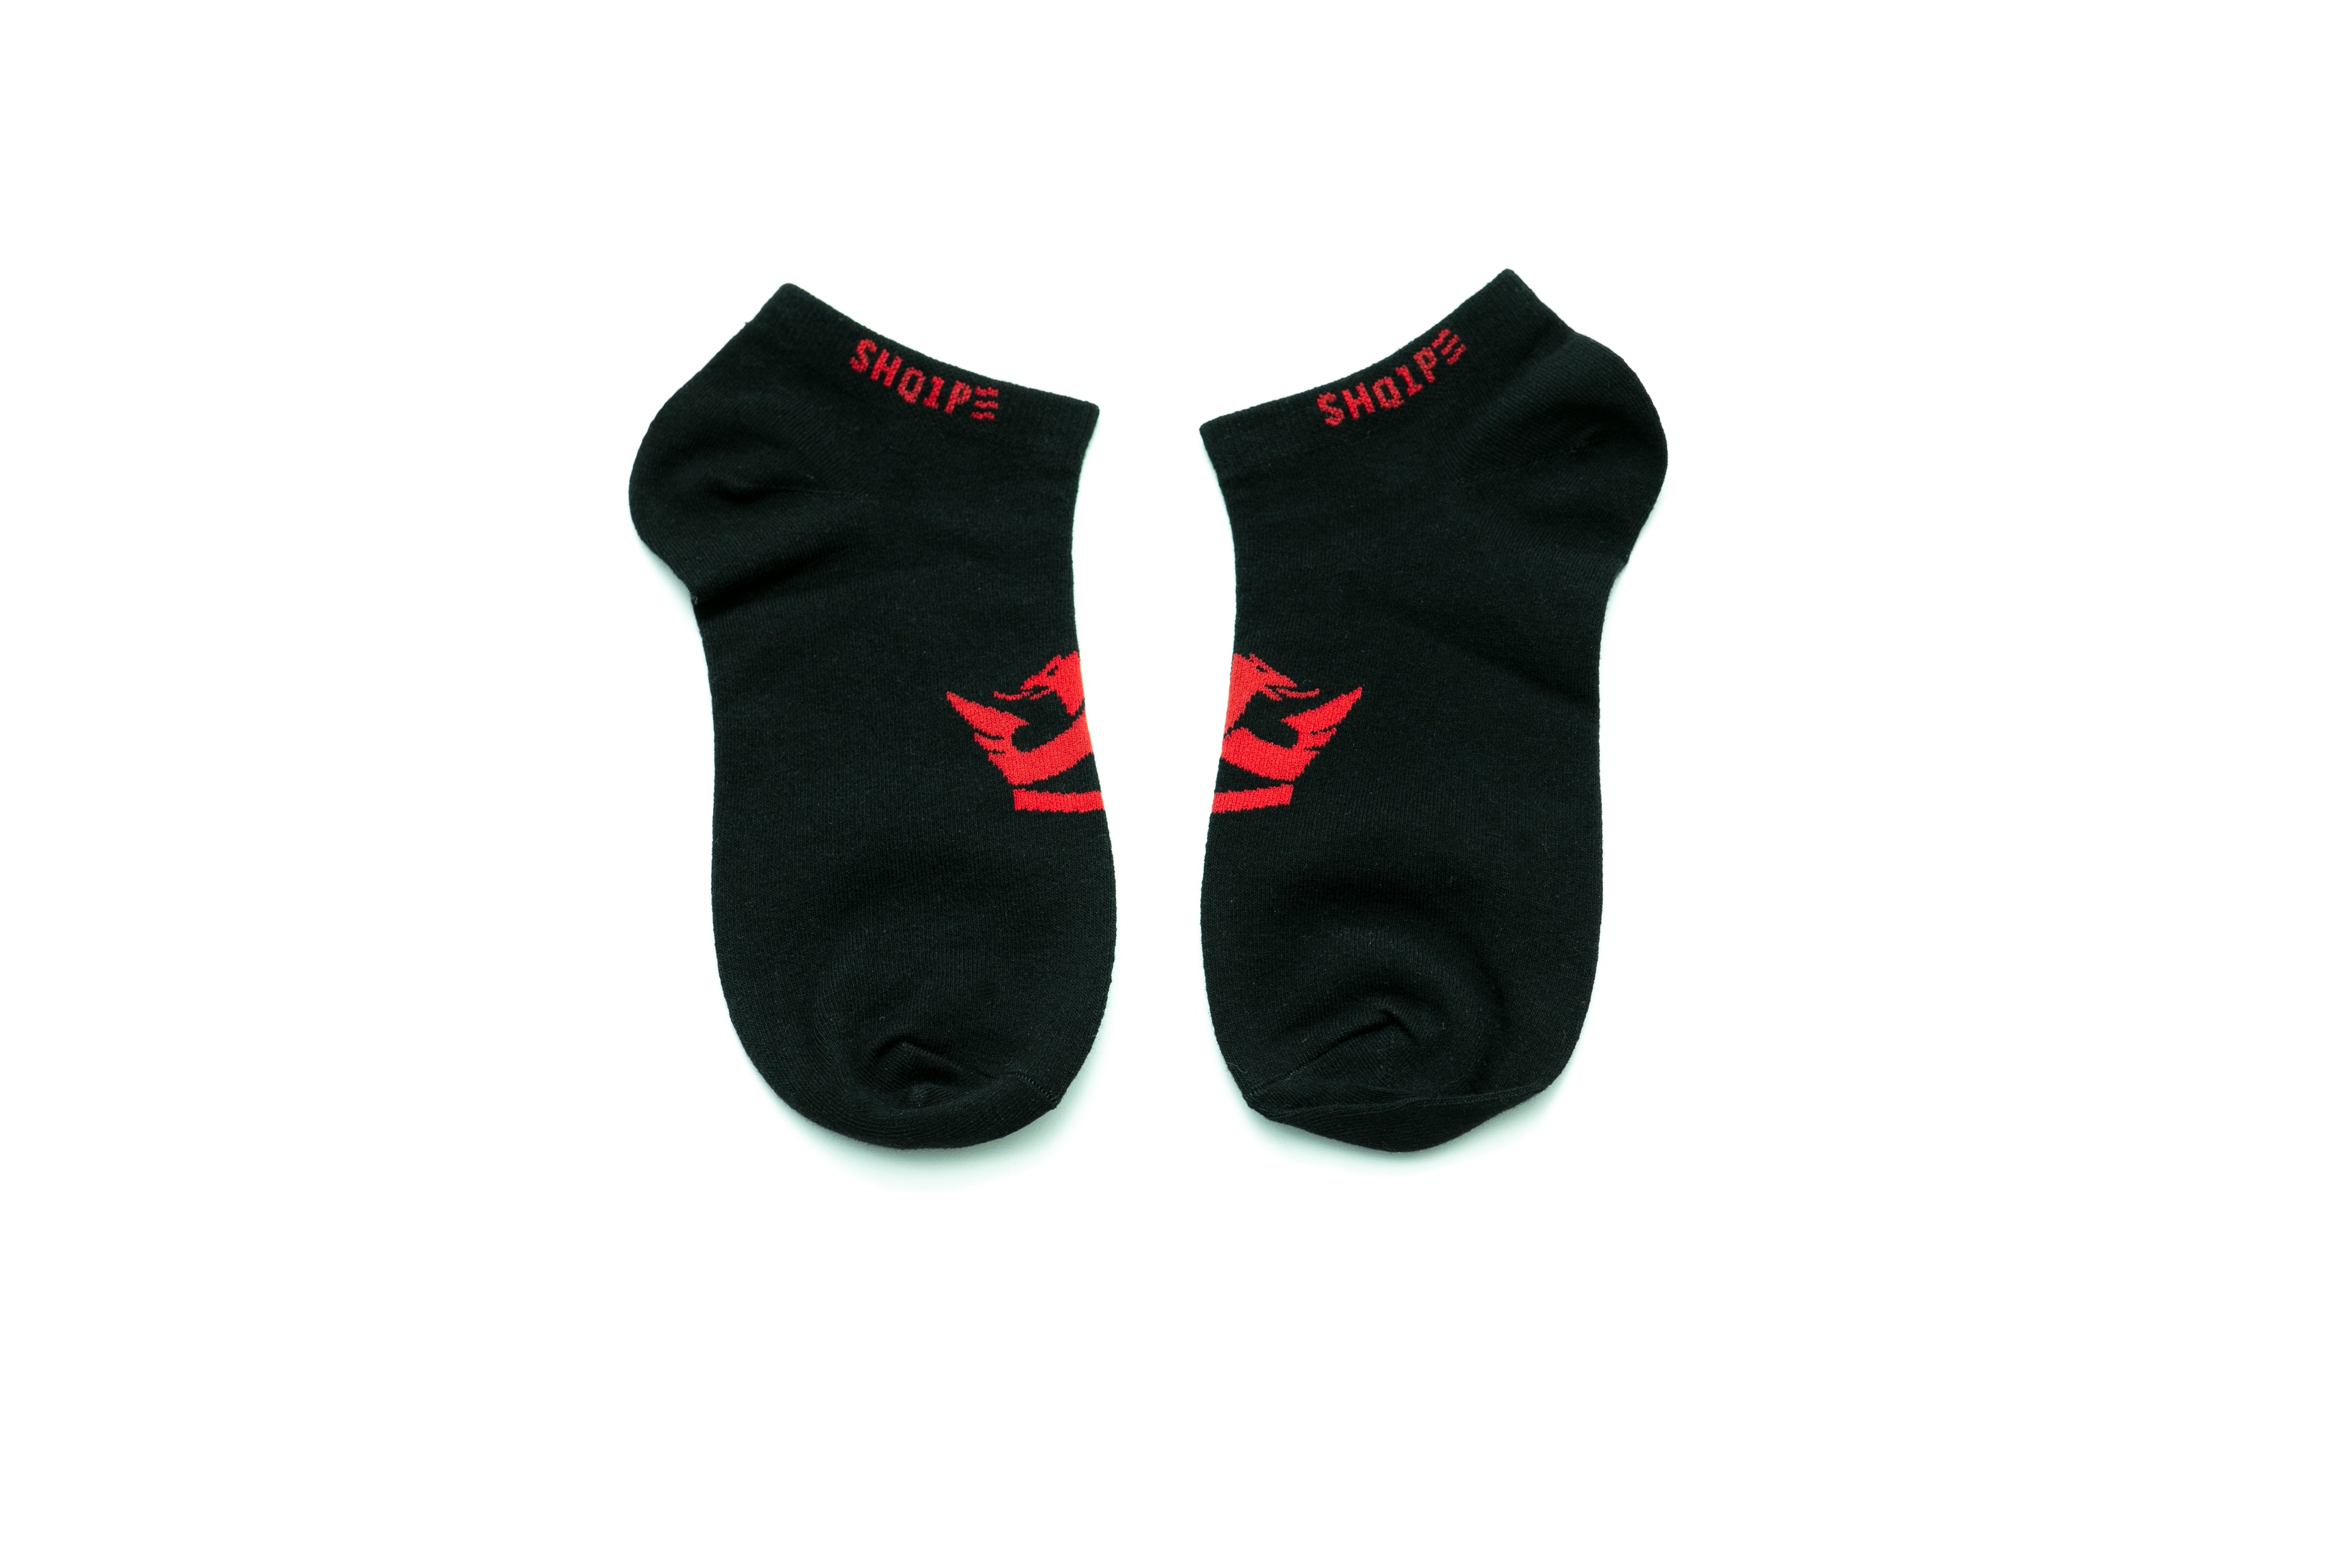 Shq1pe Socks Black/Red